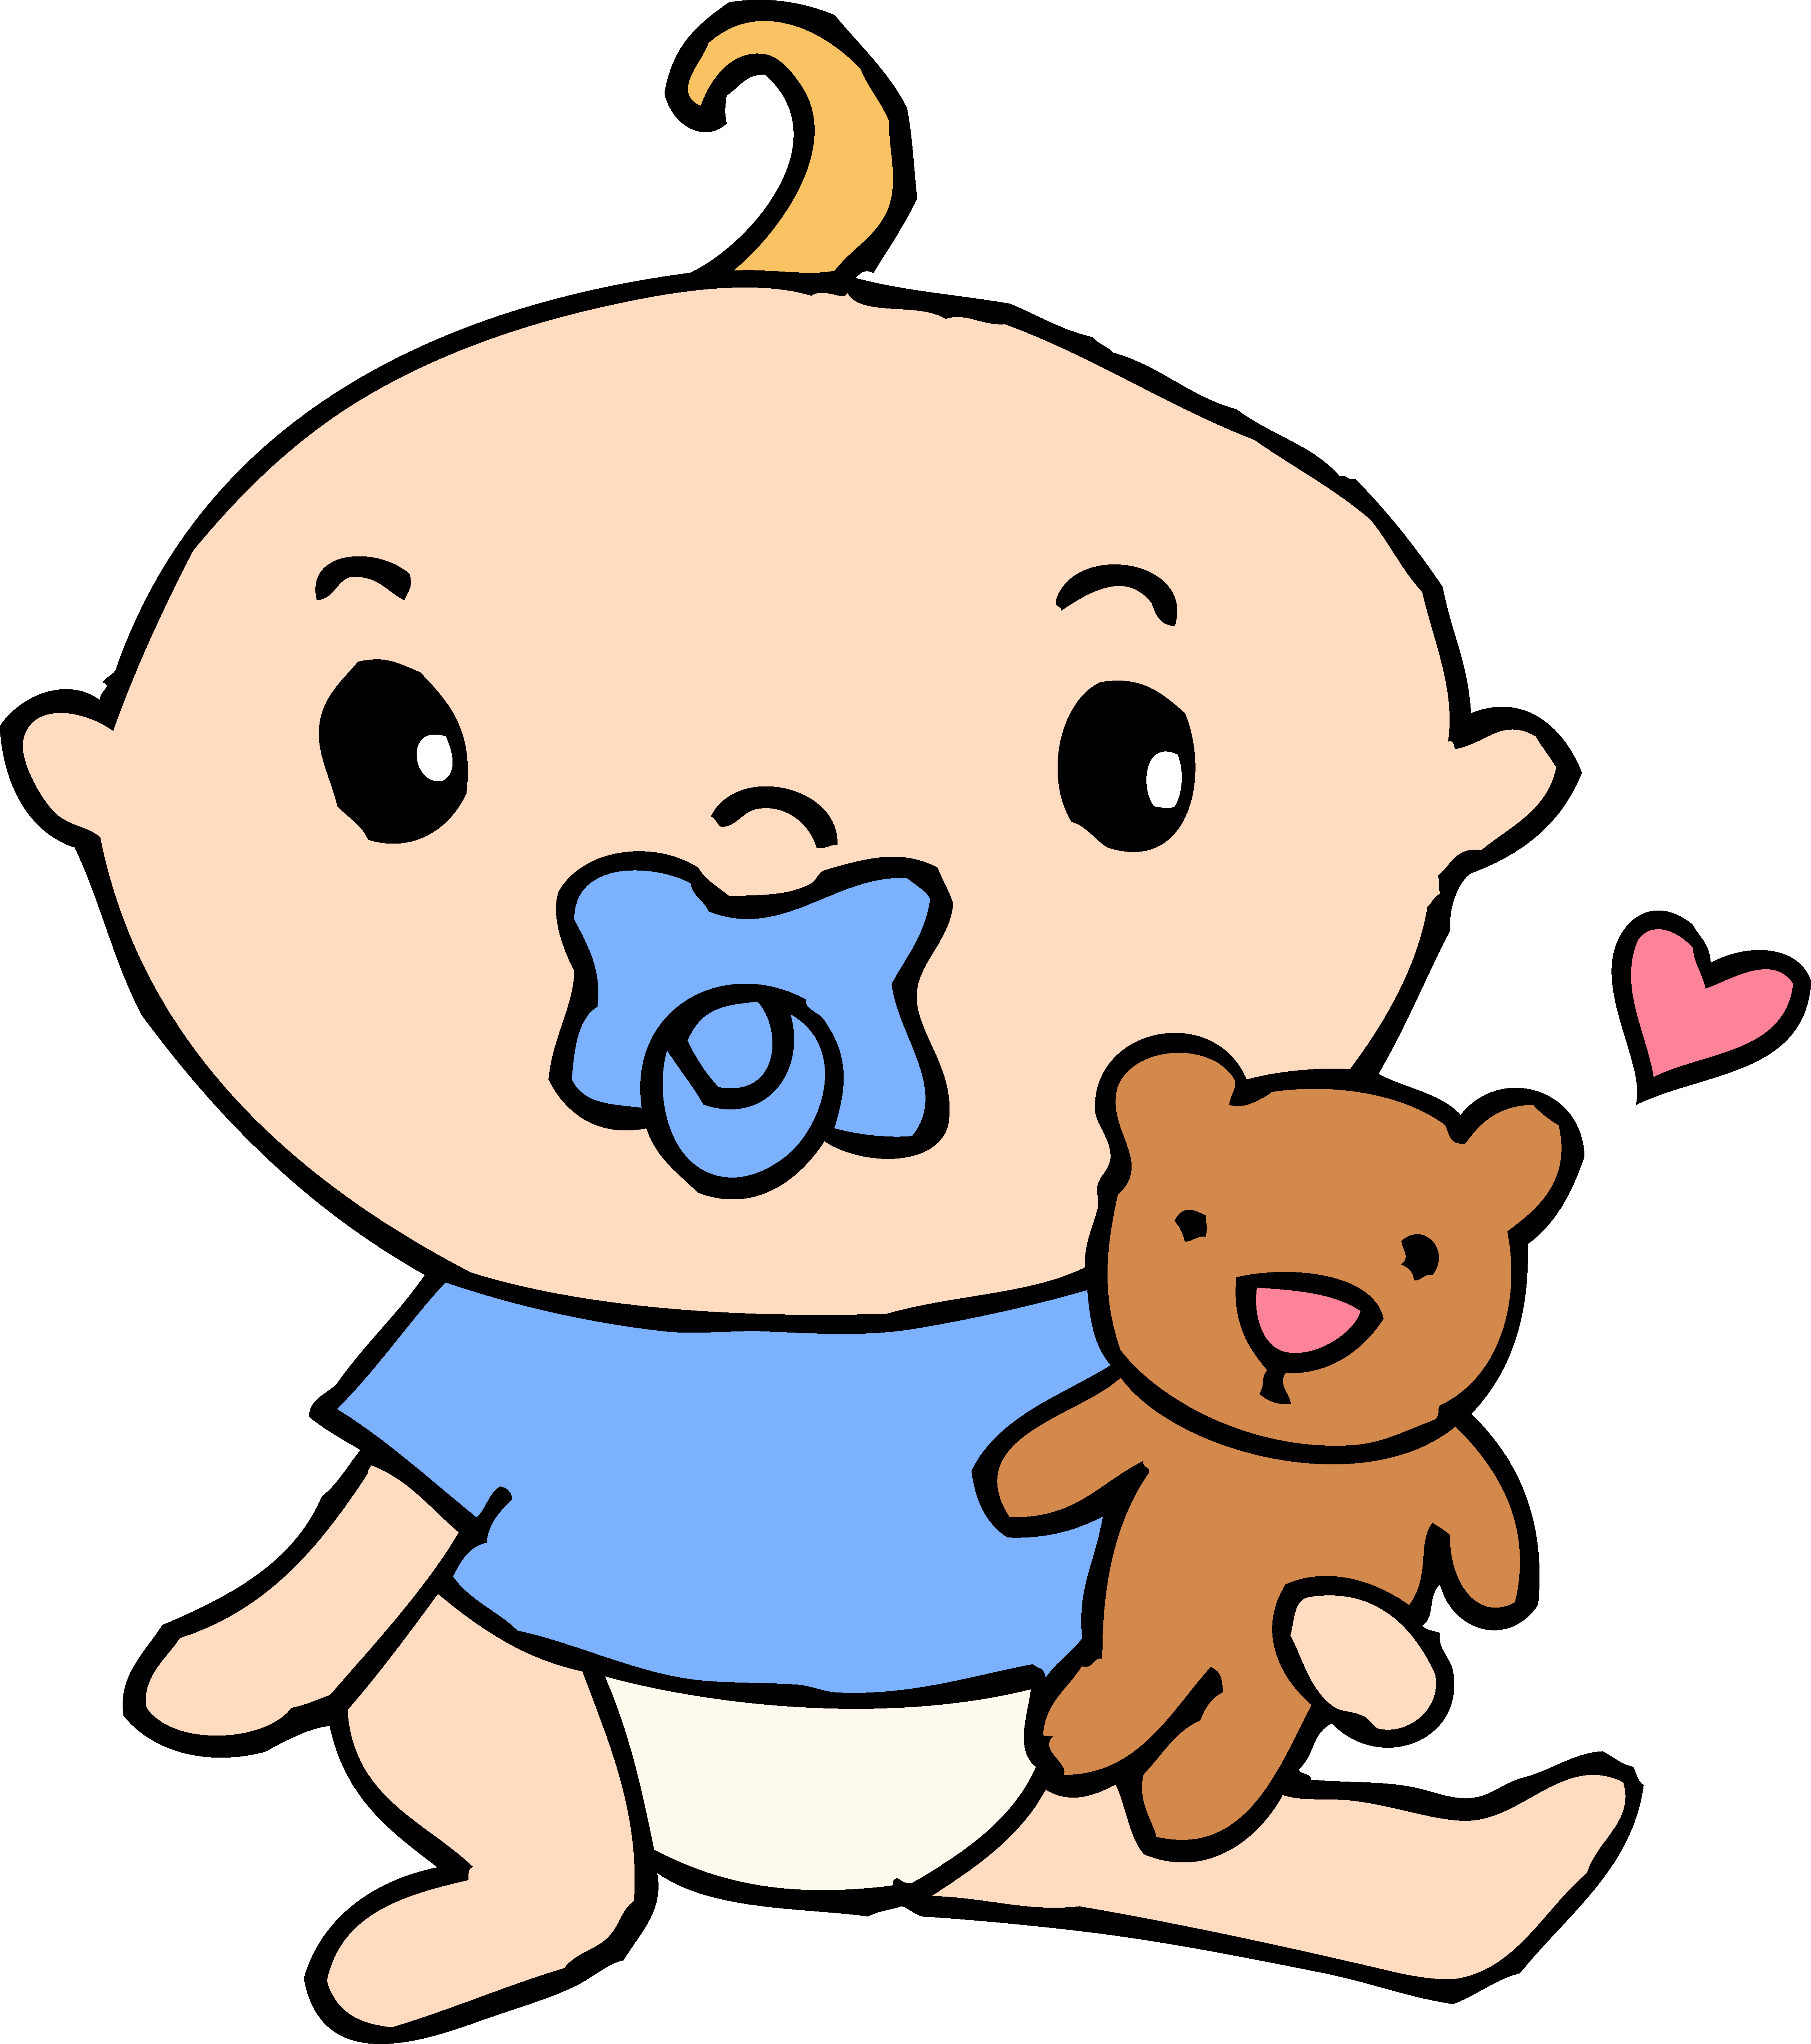 Cartoon Newborn Baby - Cliparts.co